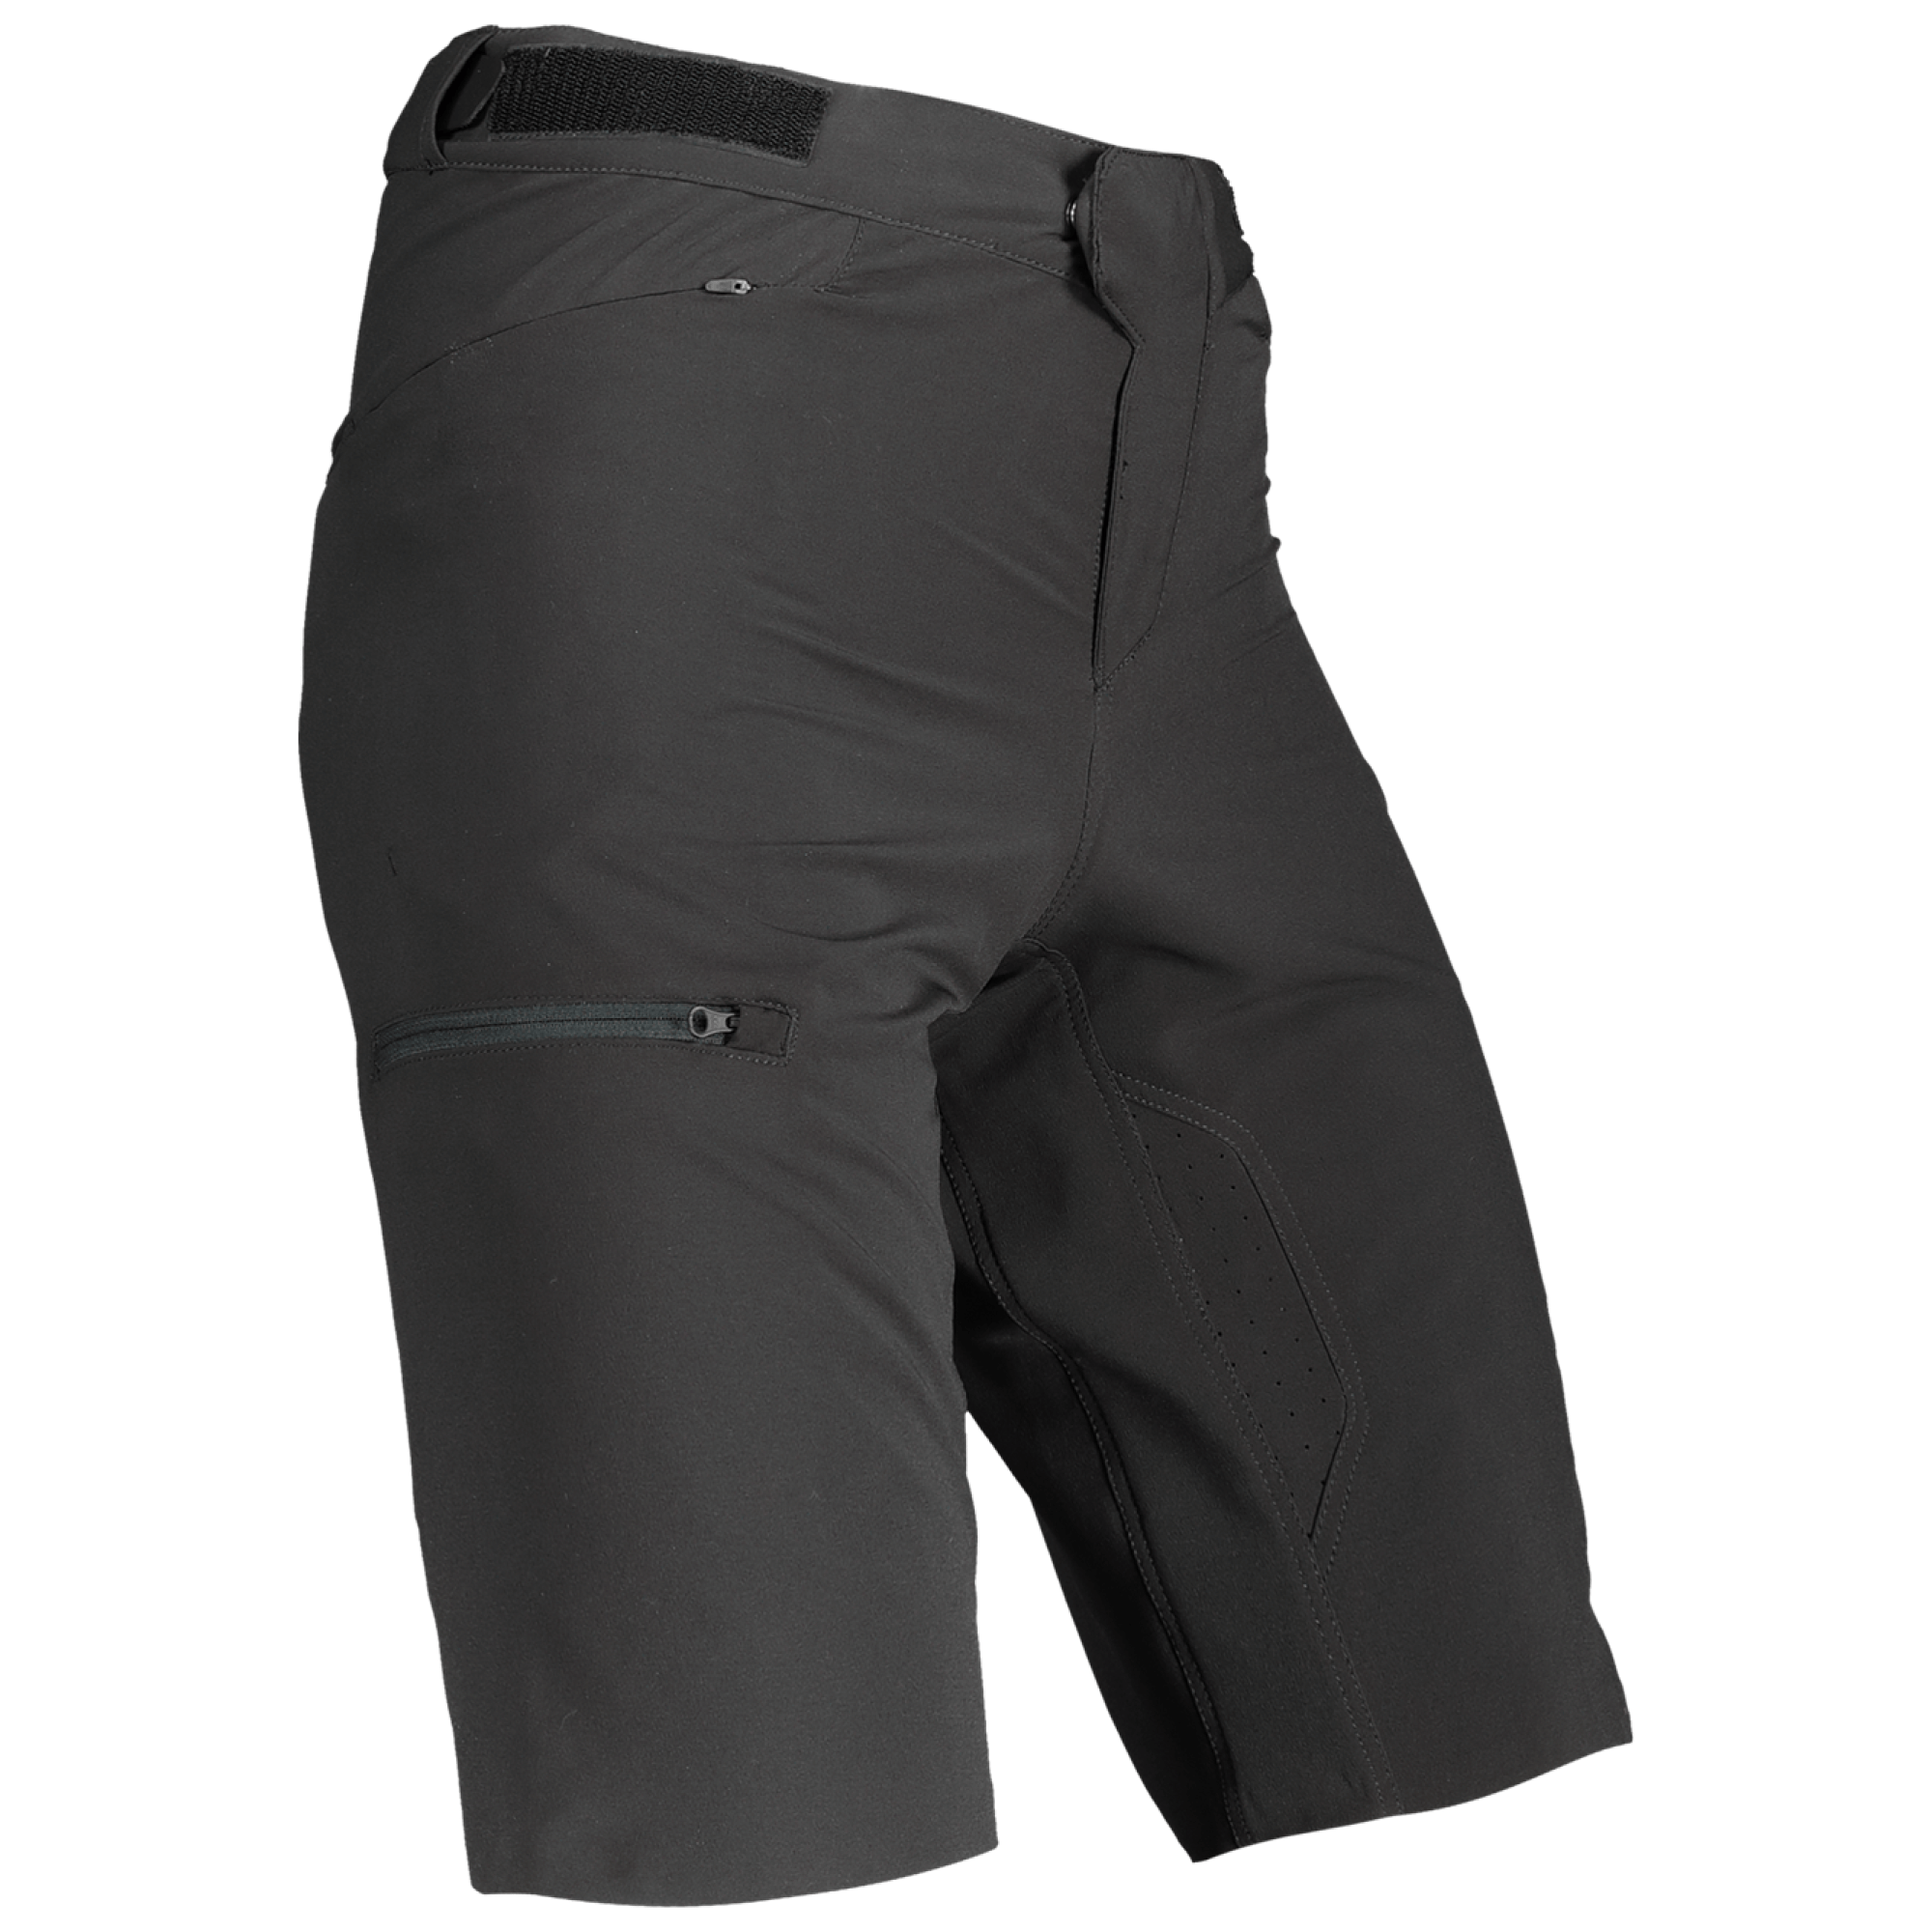 Mountain bike shorts – Oberson